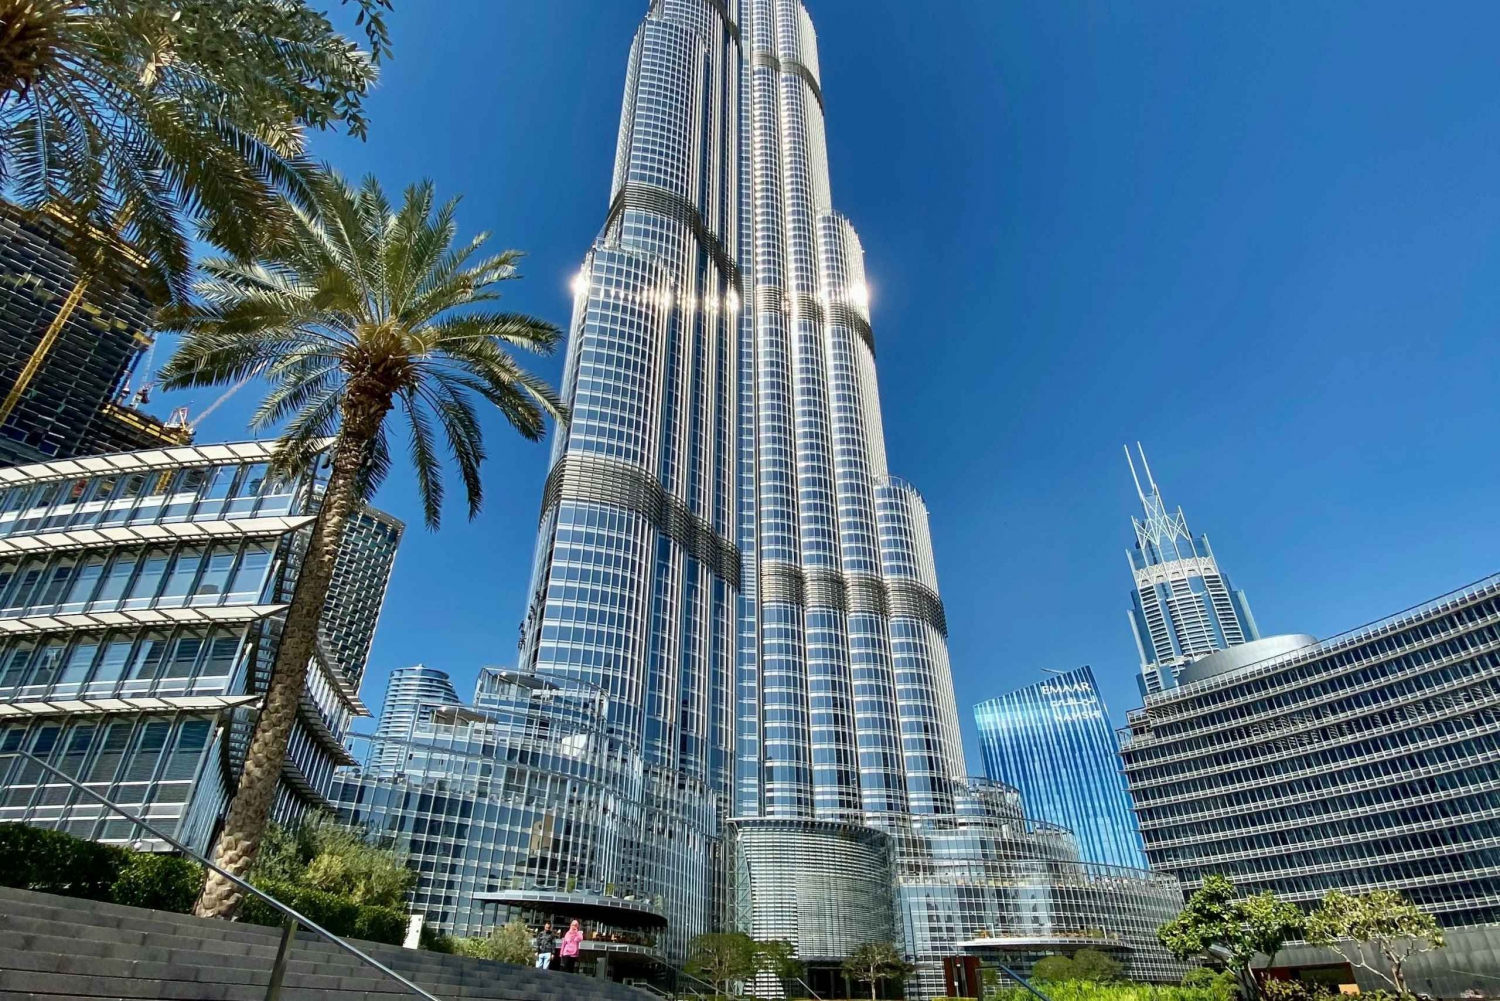 Private Dubai Excursion With Burj Khalifa (Skip The Line)